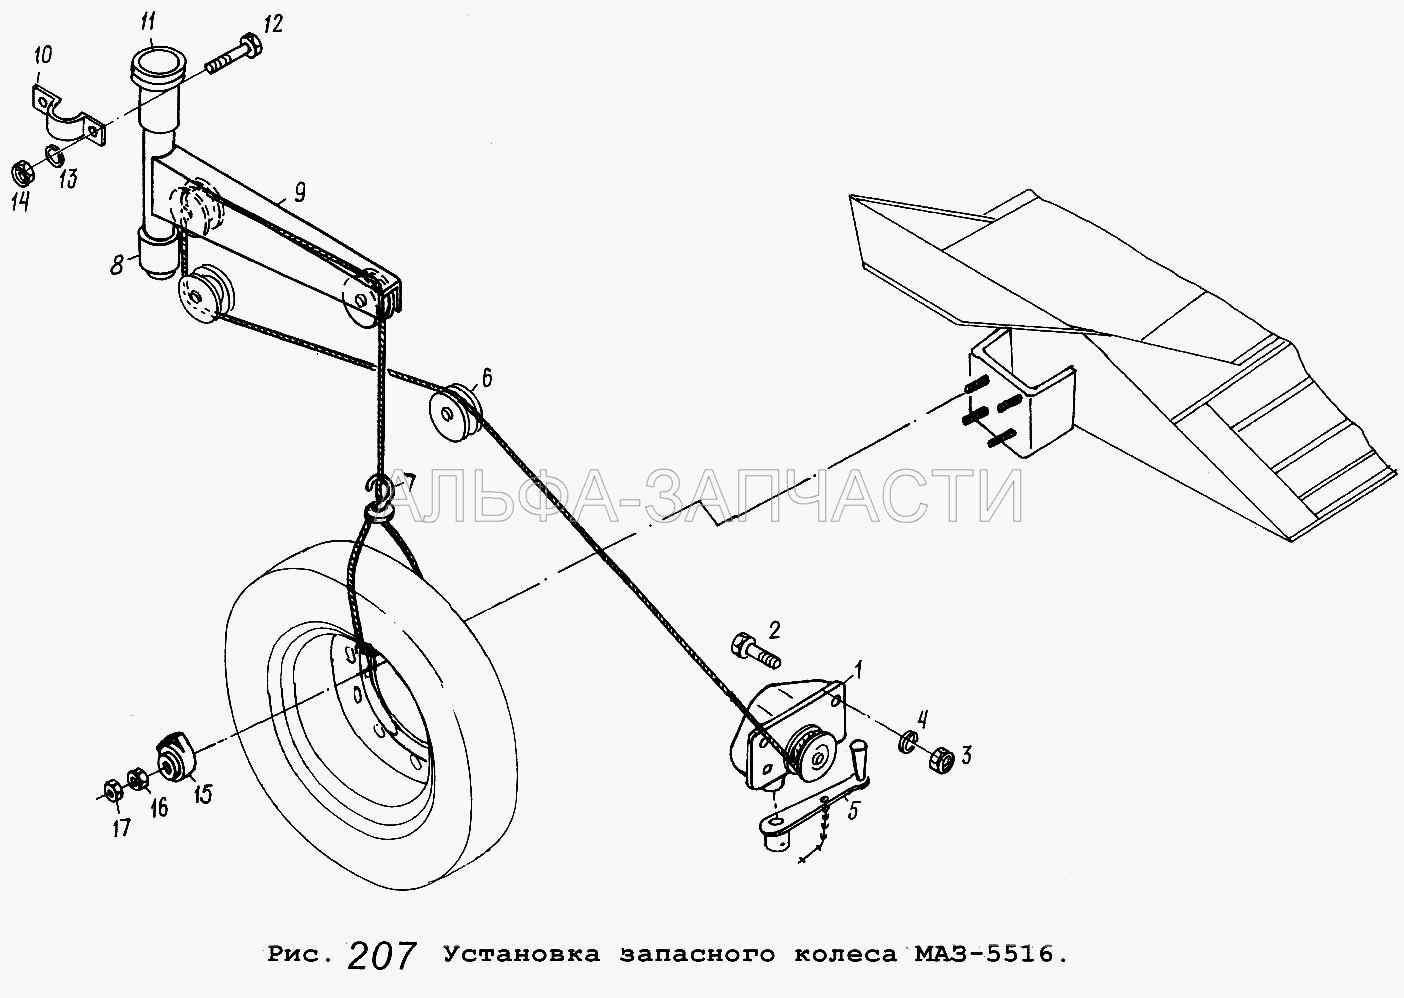 Установка запасного колеса МАЗ-5516  